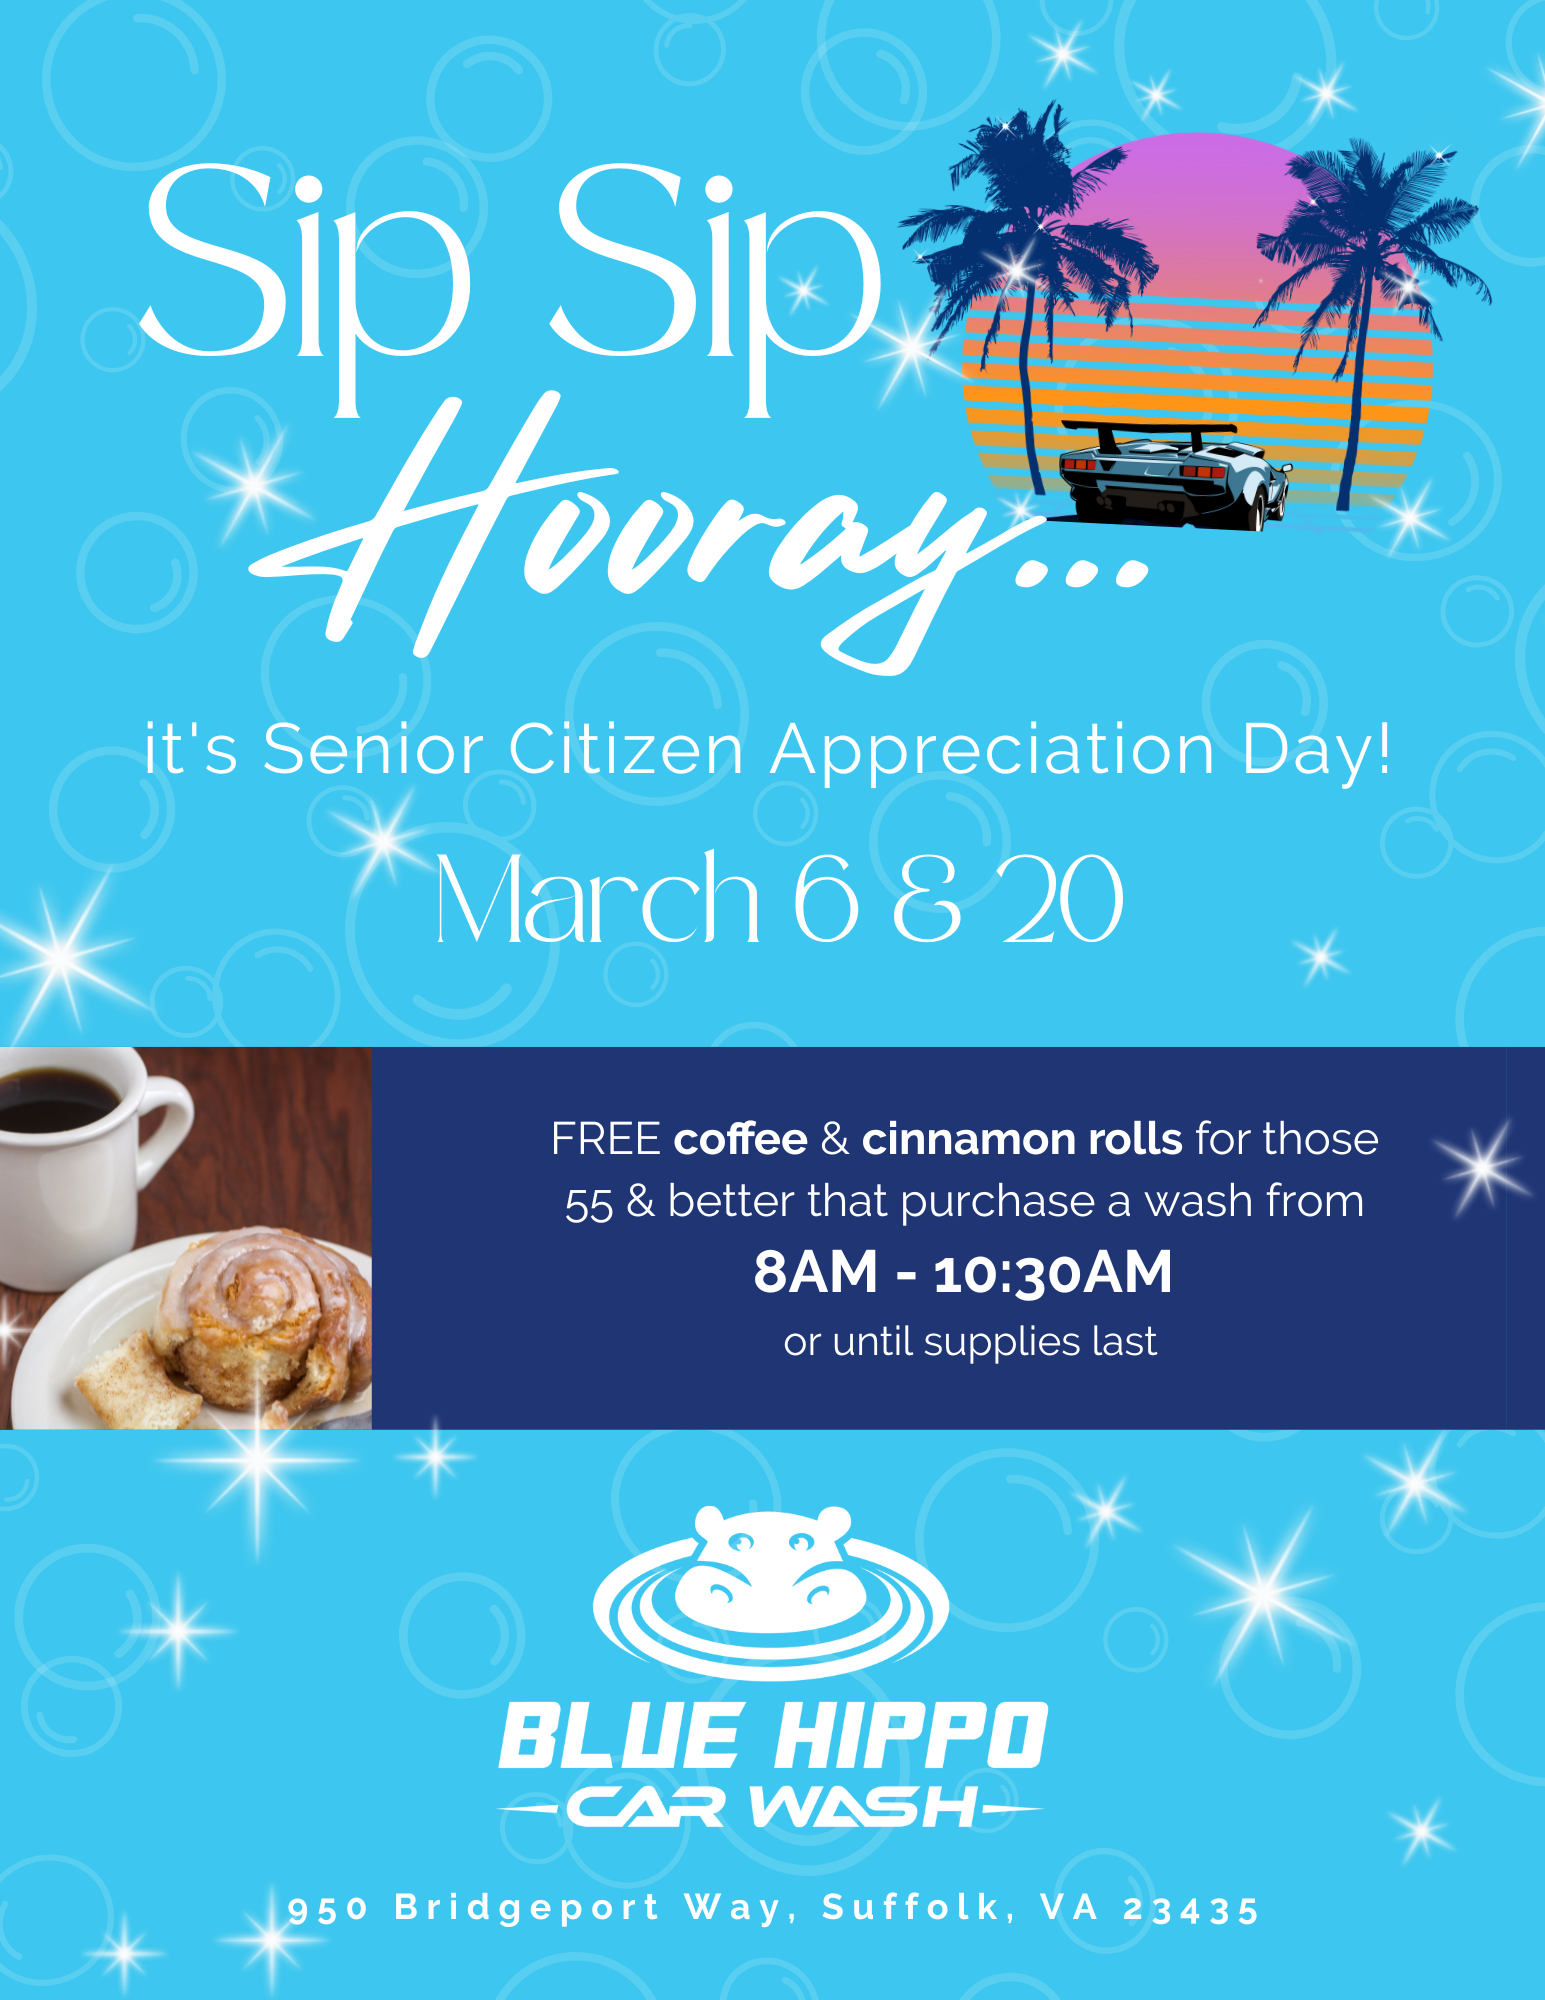 Senior Citizens Day at Blue Hippo